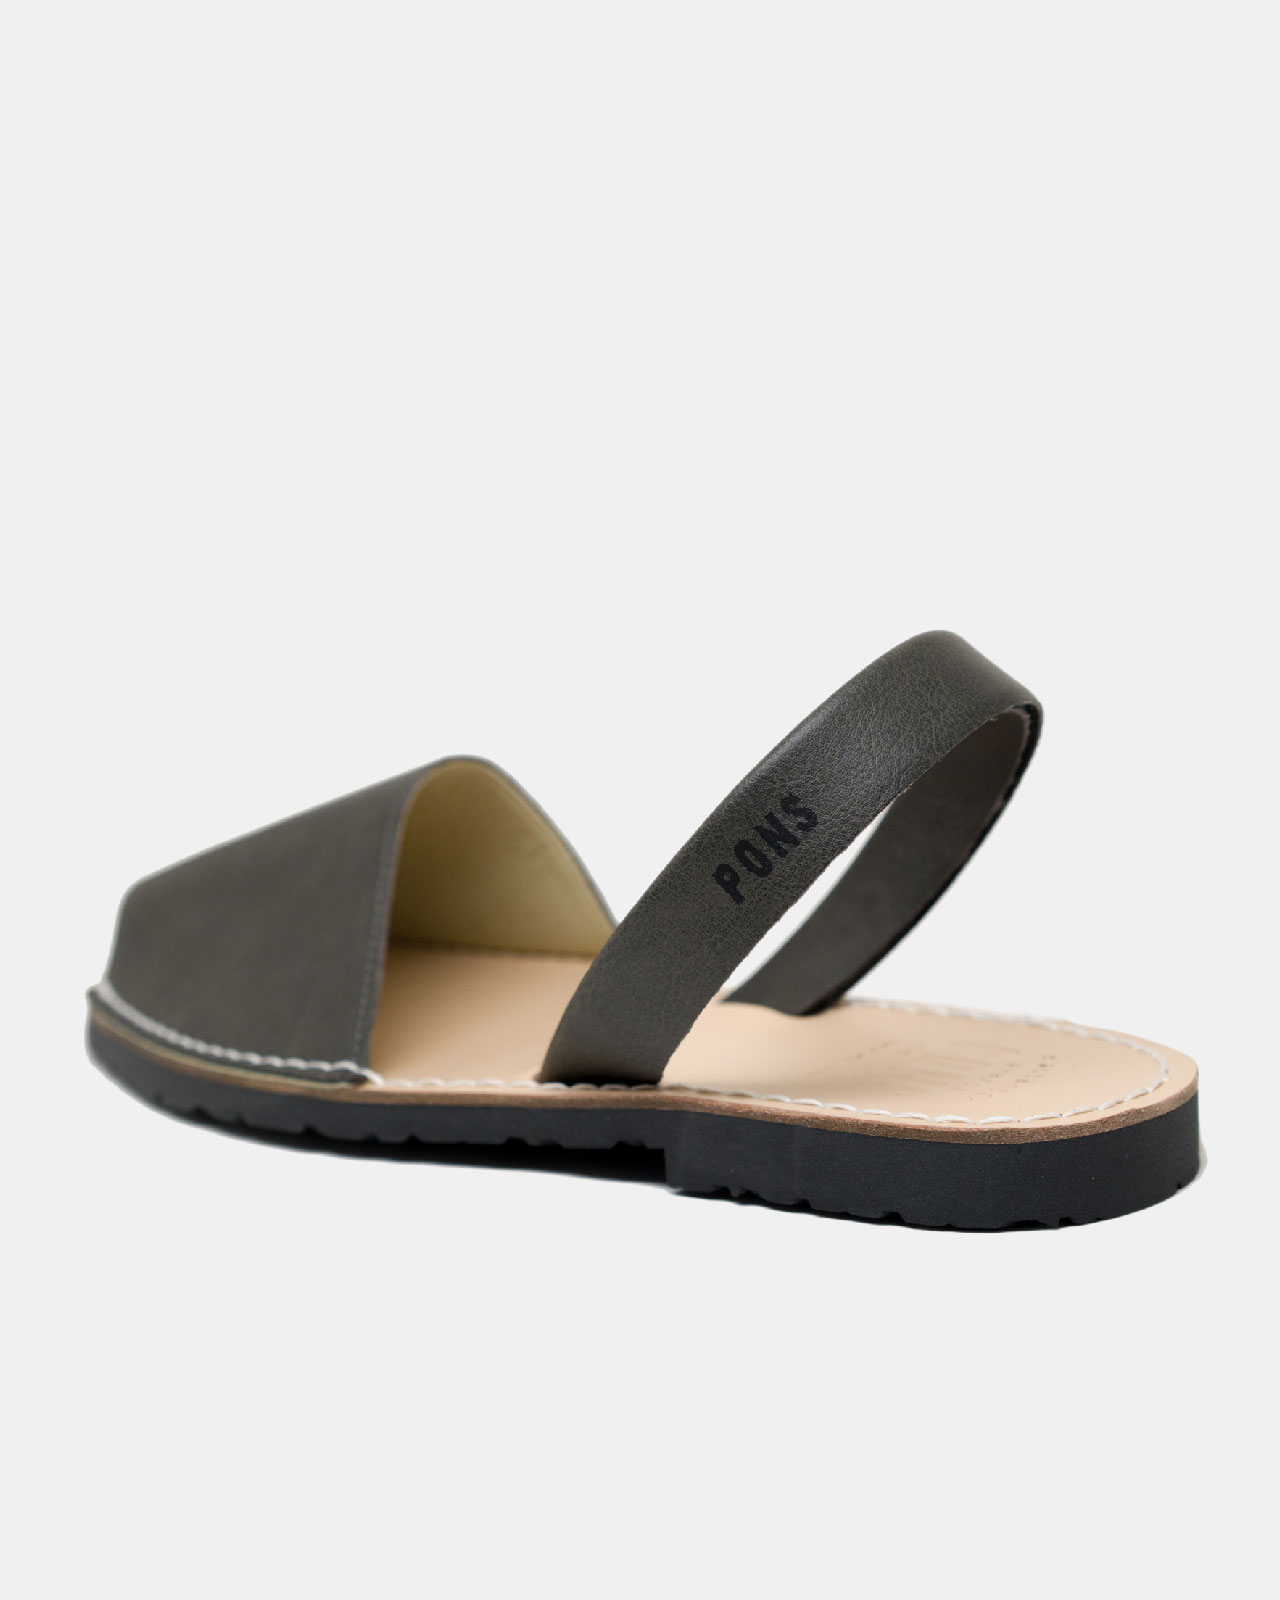 Pons Classic Style Vegan Gray Avarca Sandals for Women